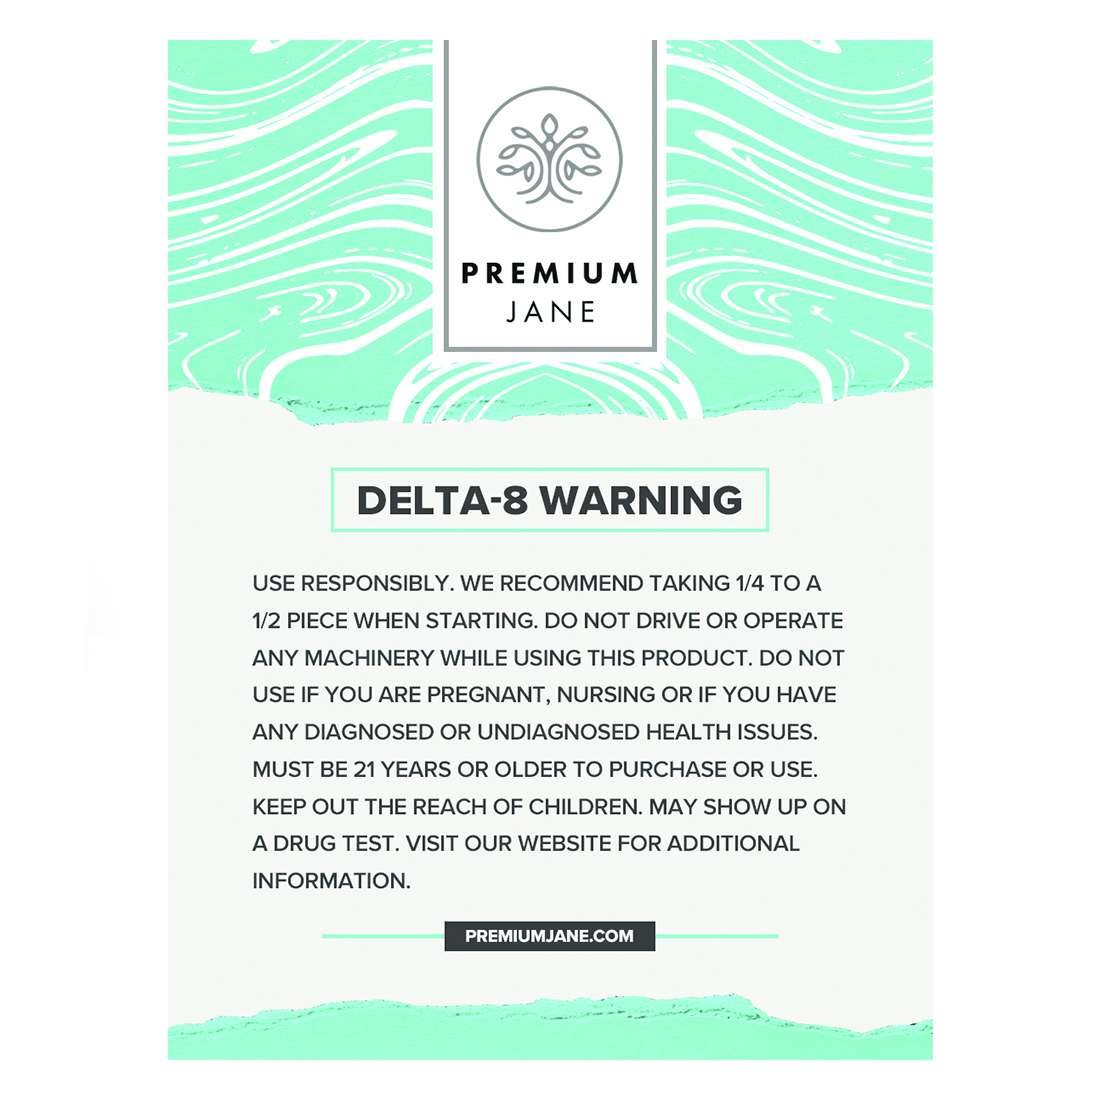 pj-delta 8-warning - preview